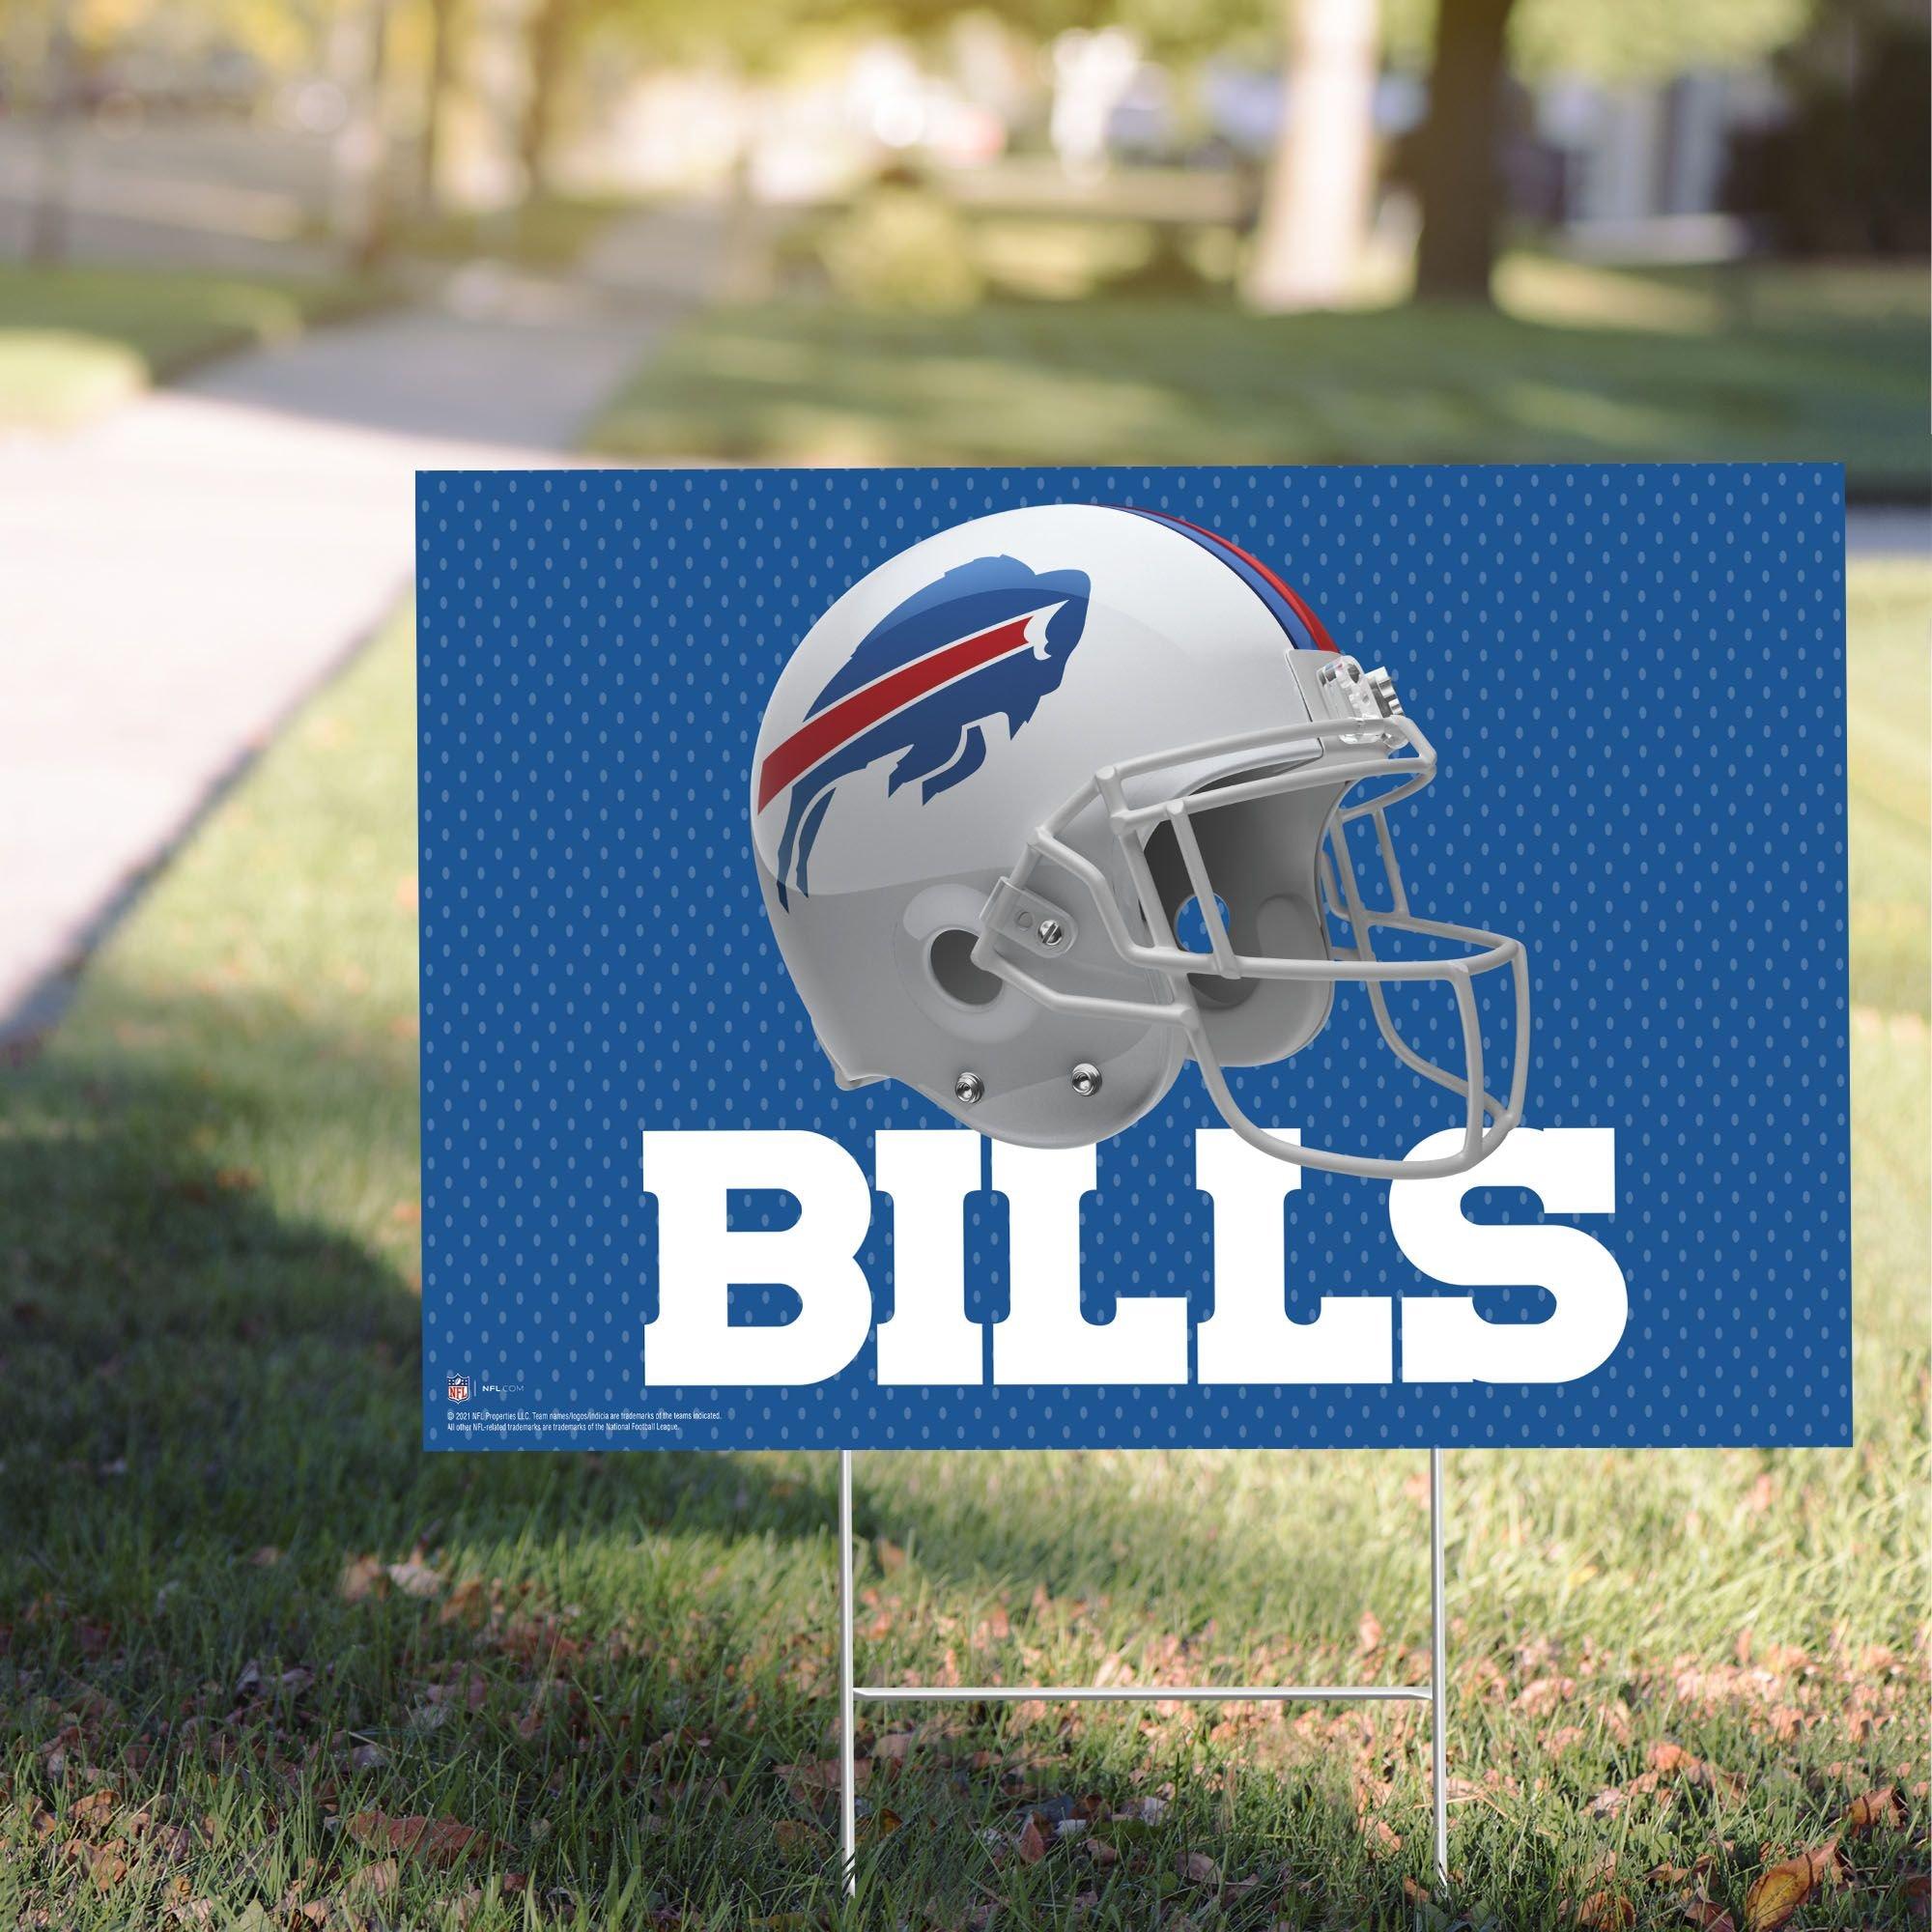 Buffalo Bills NFL Fan Patches for sale